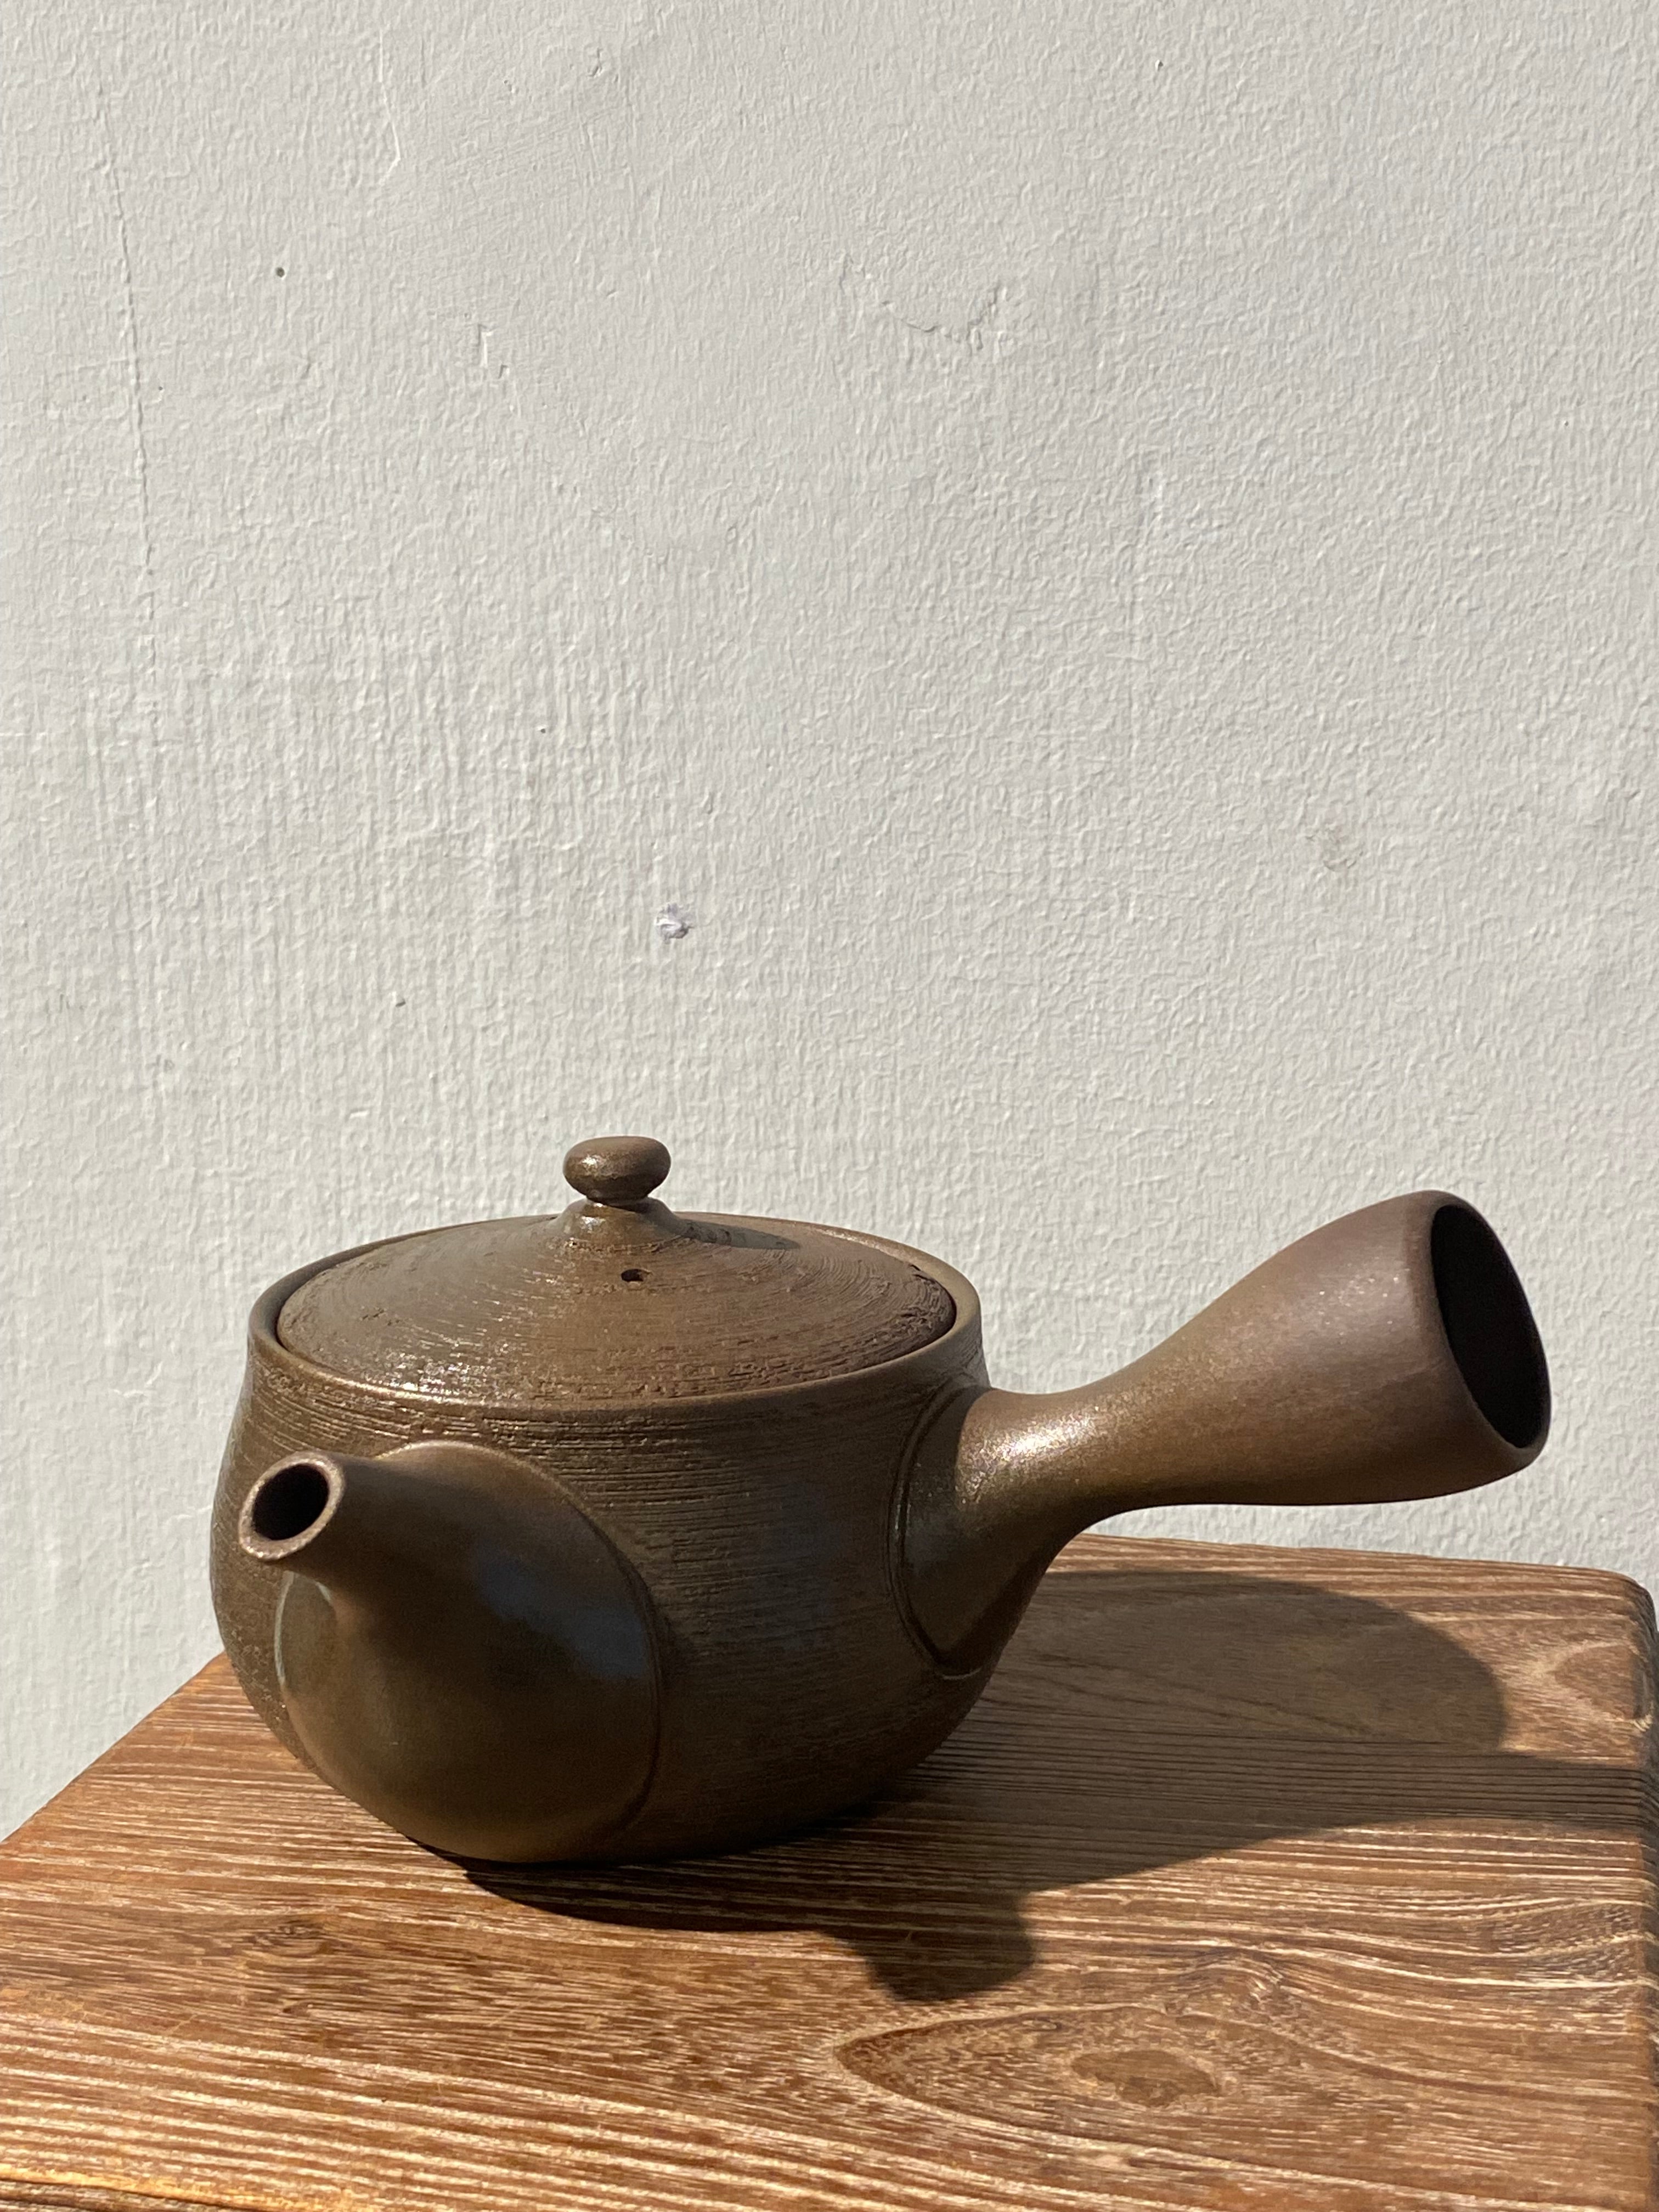 Rustic dark brown teapot with handle